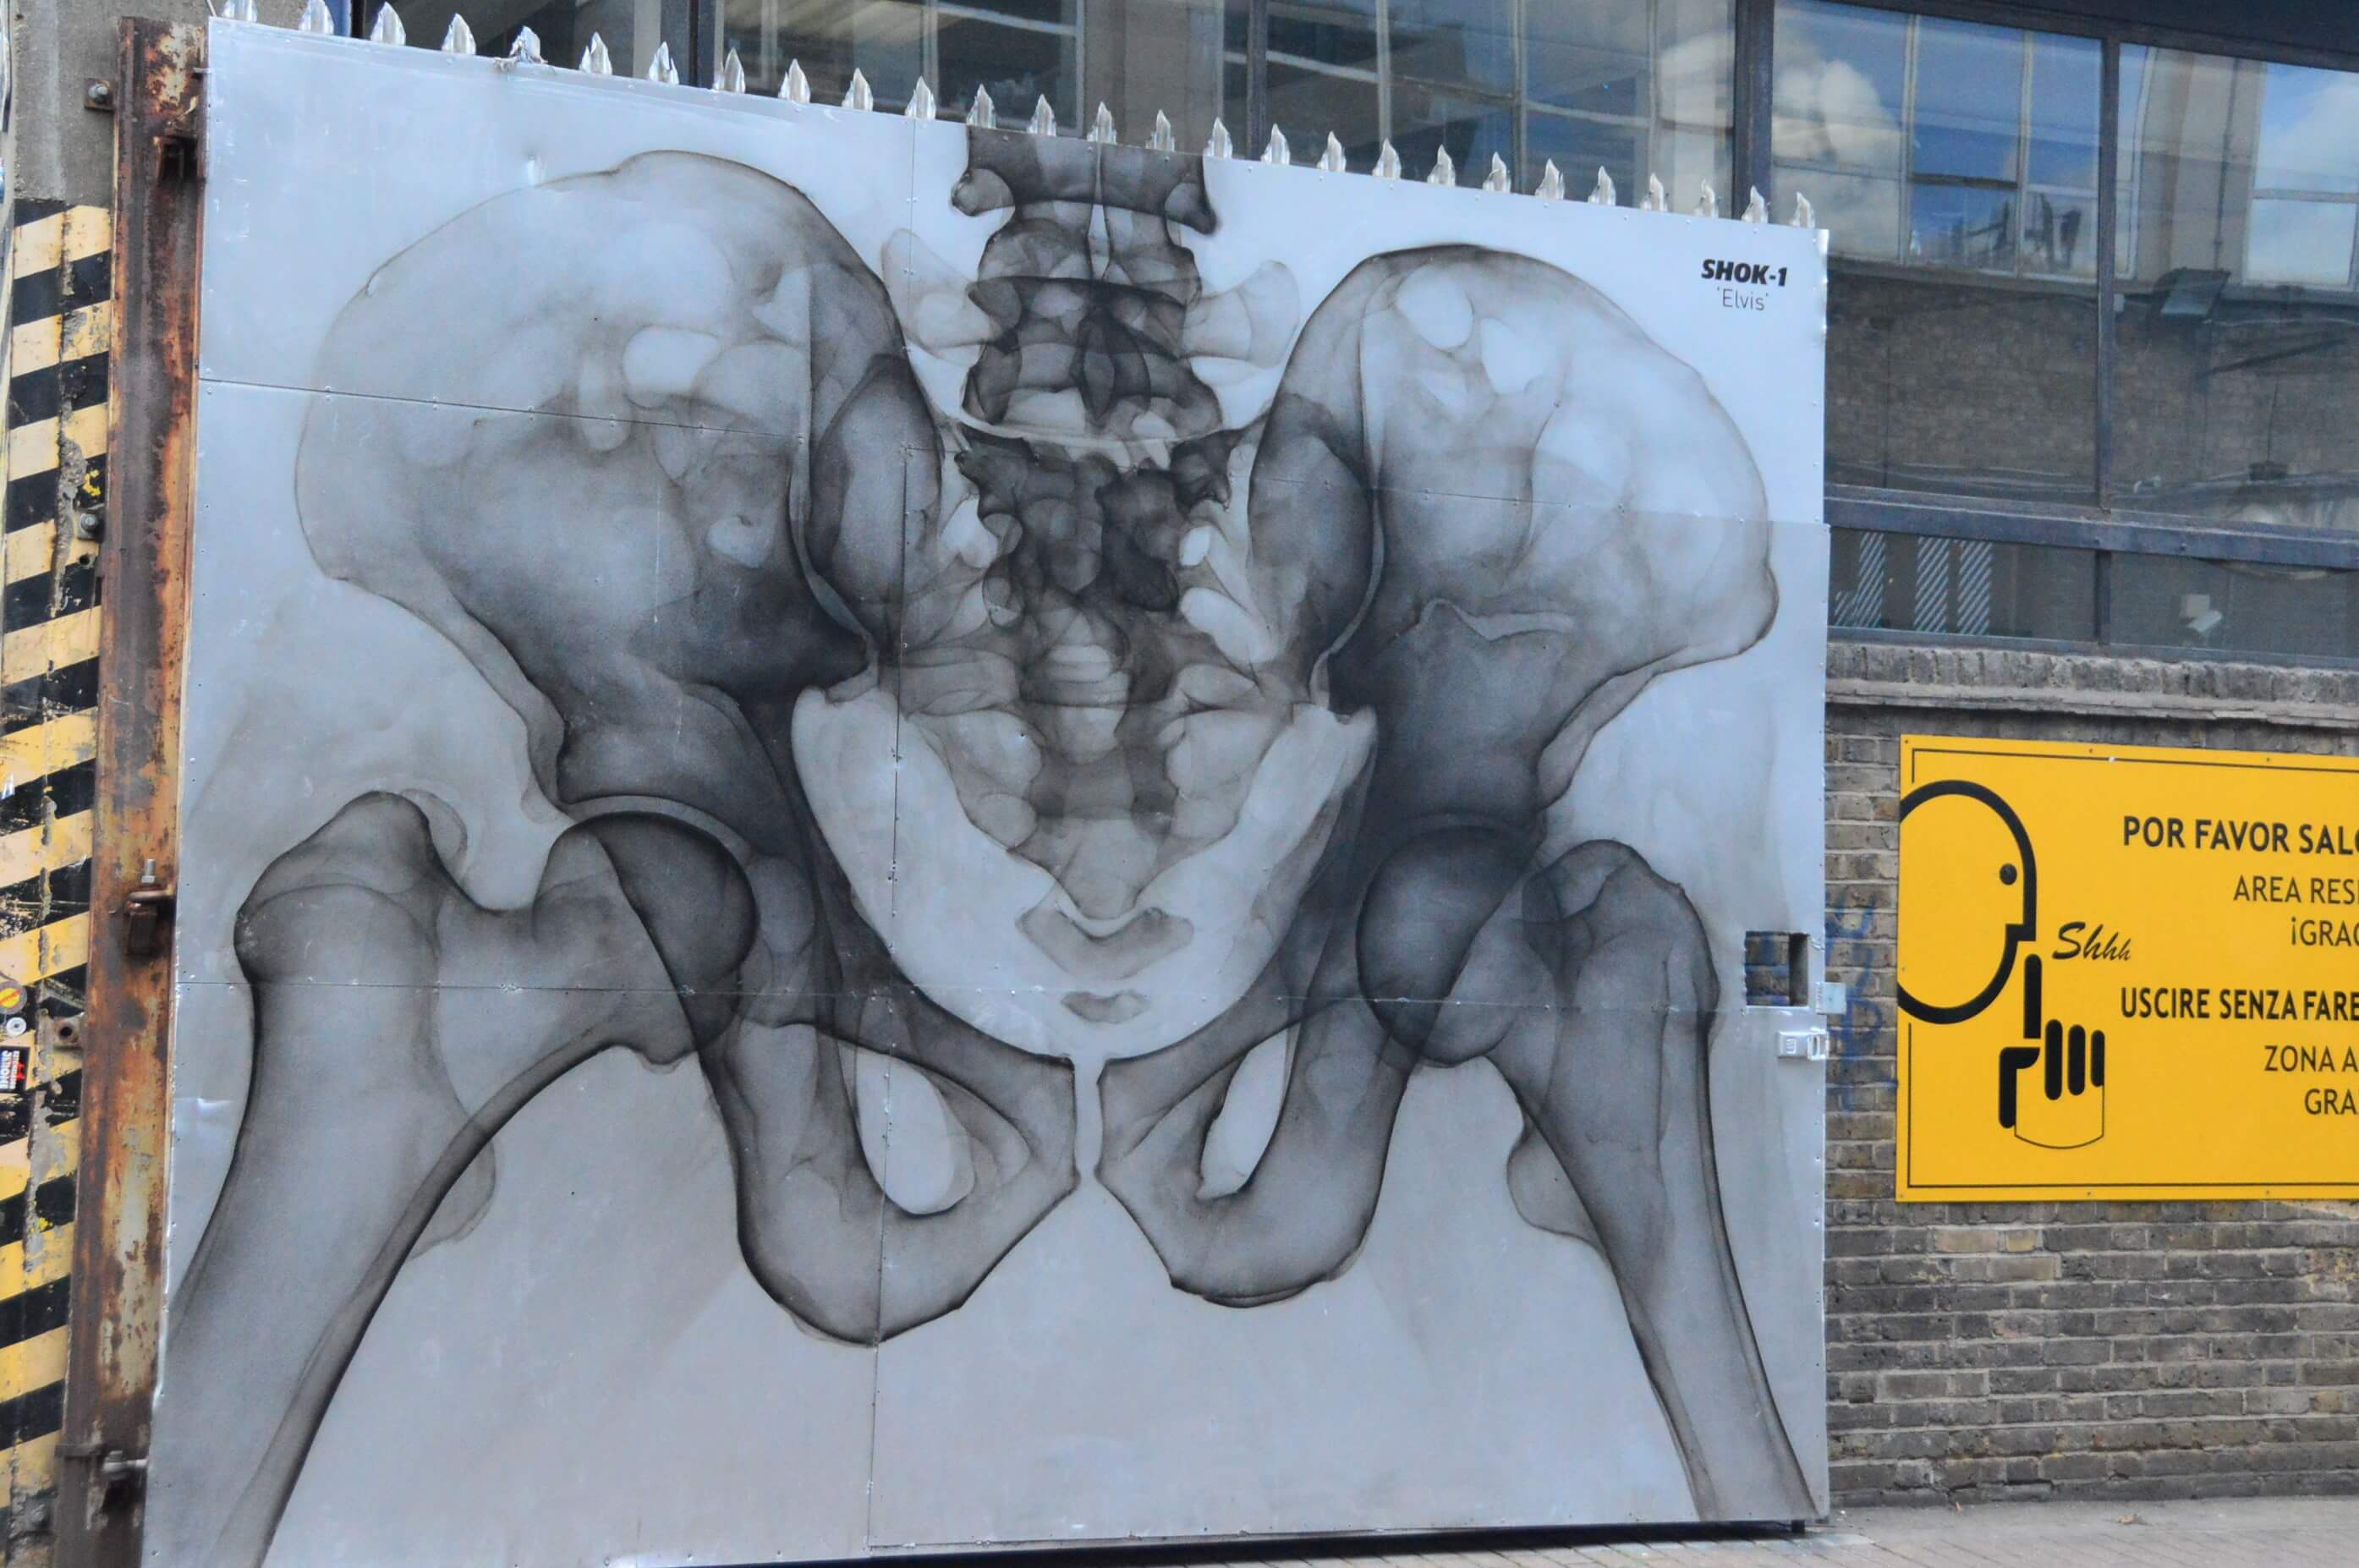 london street art based on an x-ray